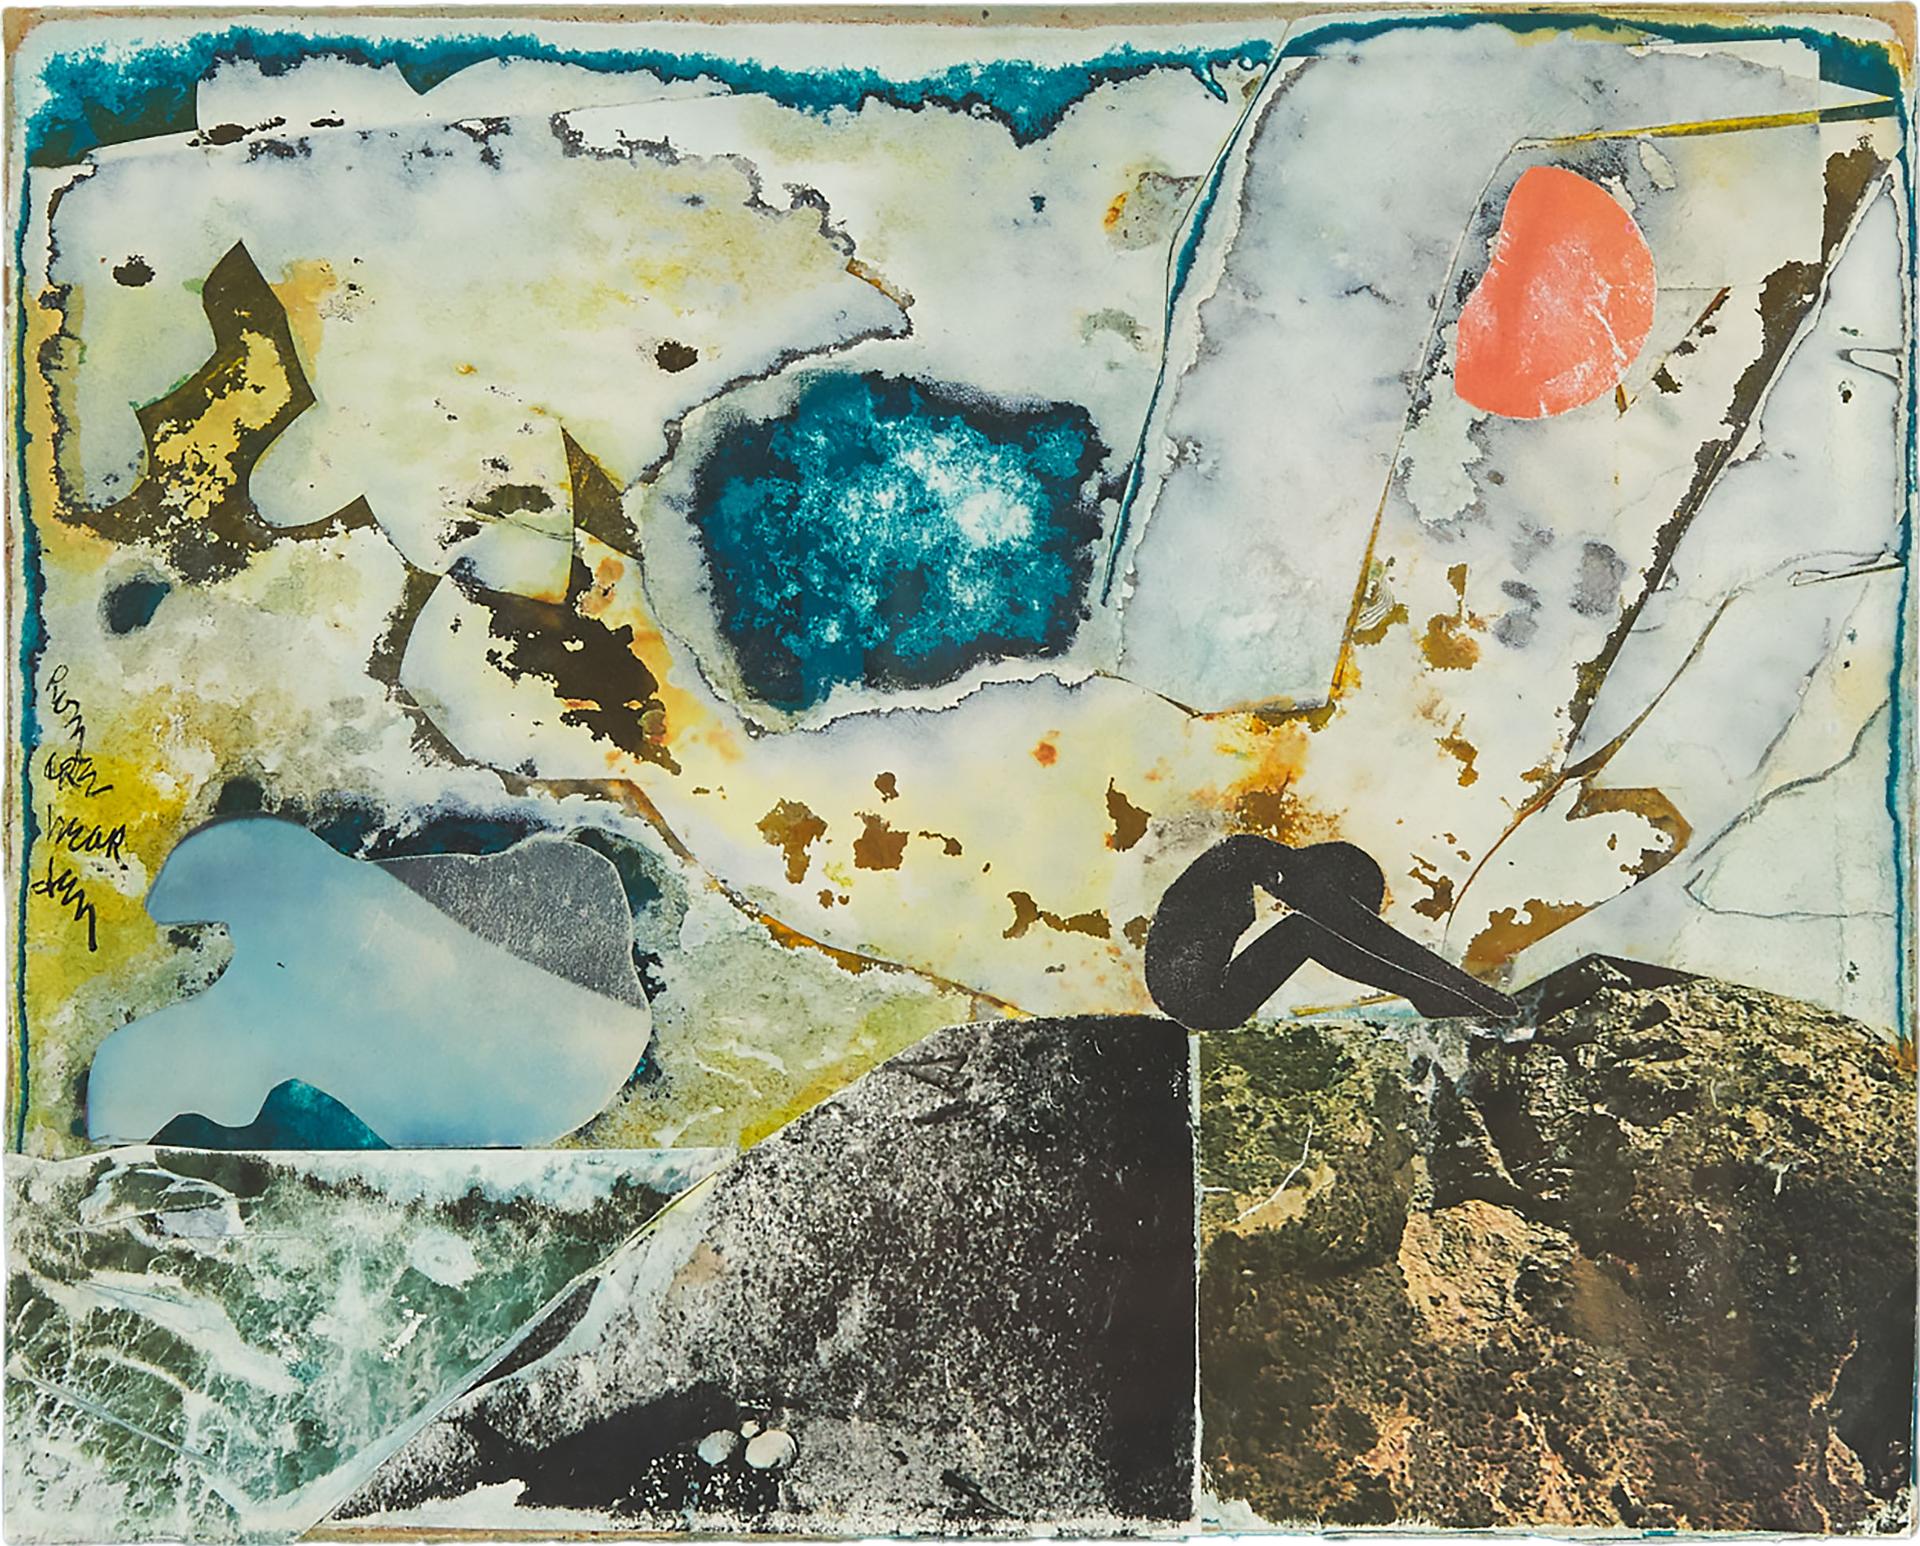 Romare Howard Bearden (1911-1988) - Untitled (Figure On A Rock), Circa 1970s